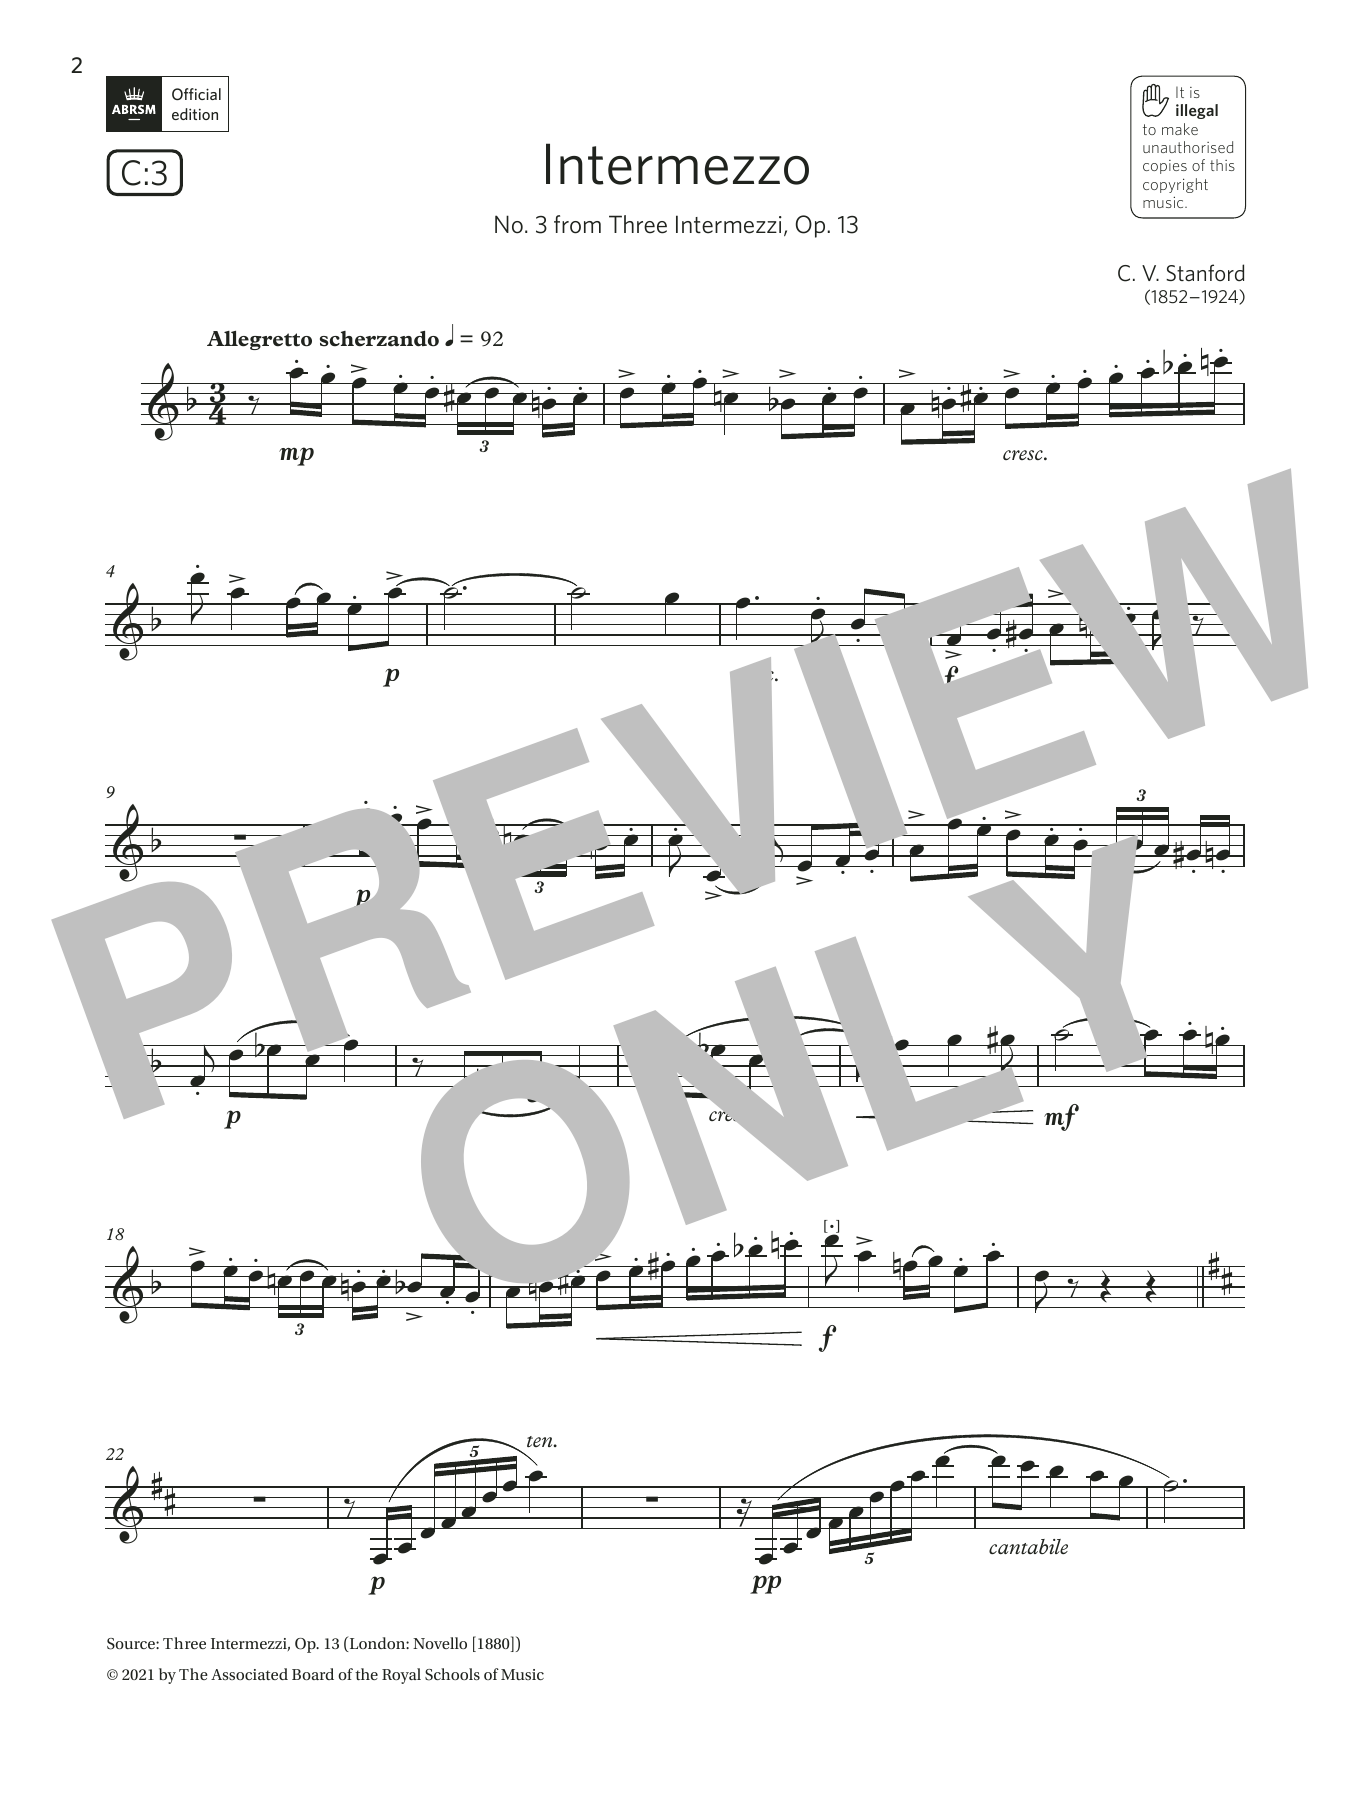 Download Charles Villiers Stanford Intermezzo (from Three Intermezzi) (Gra Sheet Music